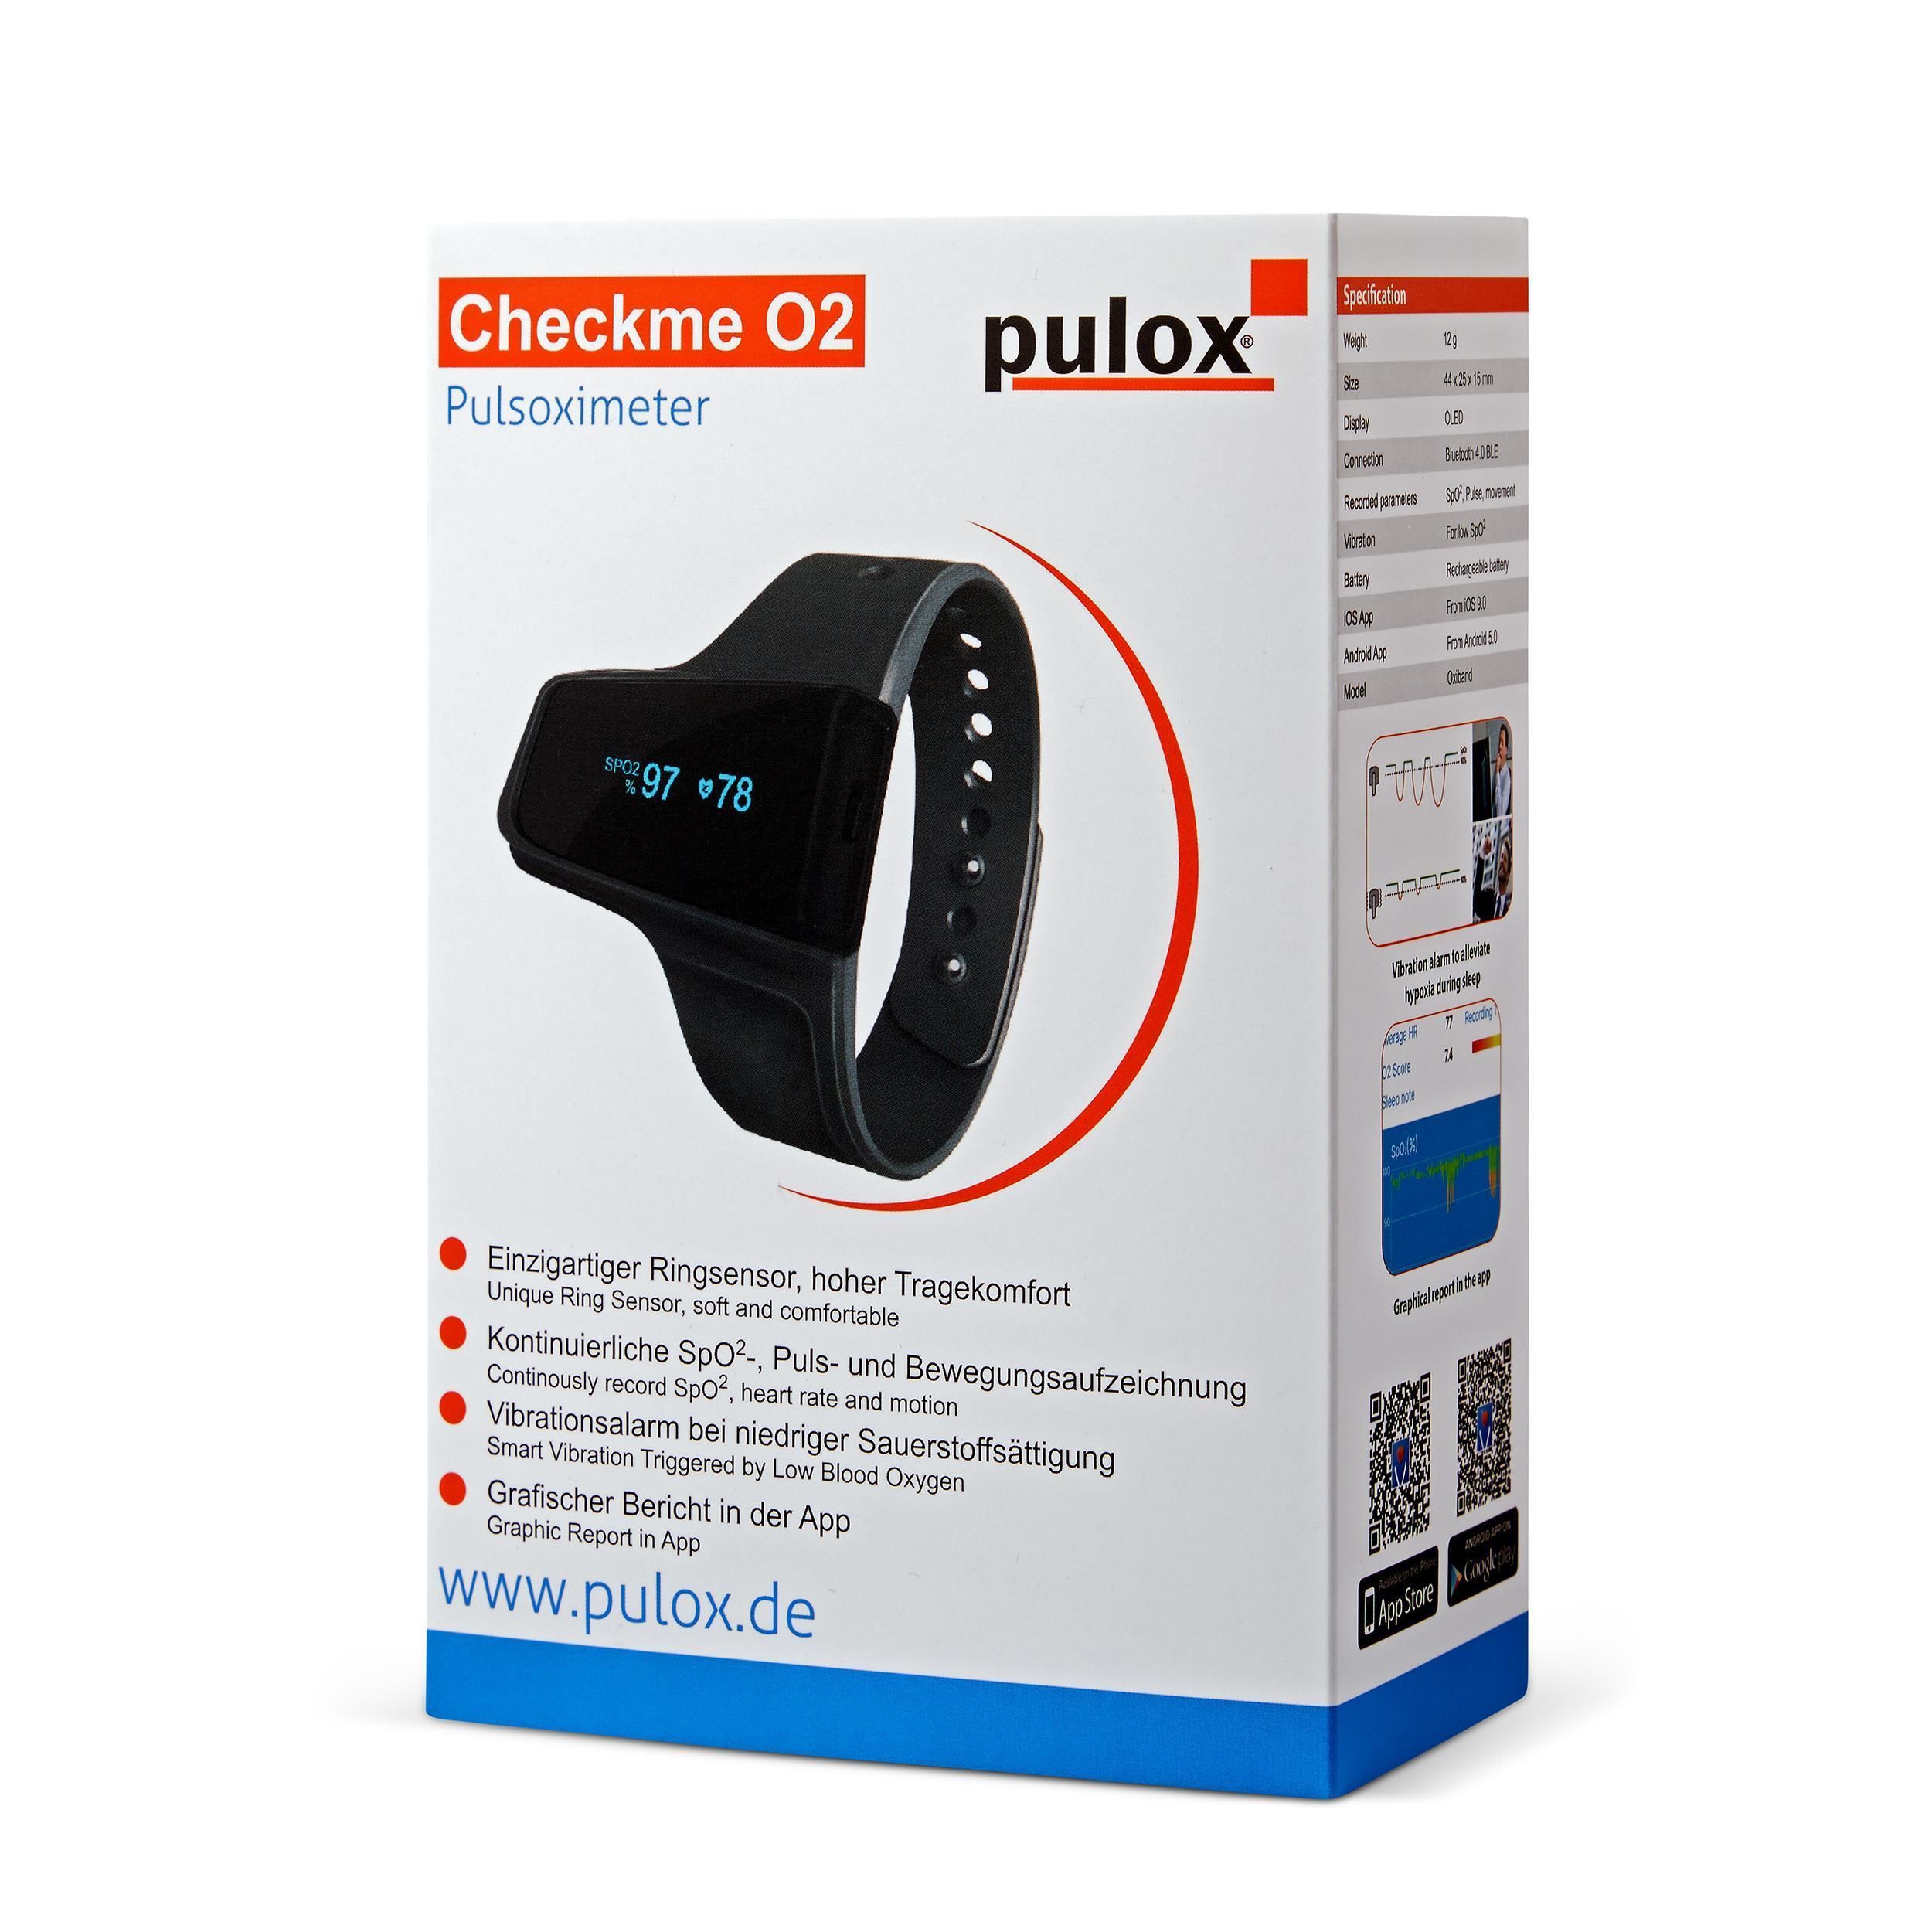 pulox Checkme O2 - Handgelenk-Pulsoximeter mit Ringsensor